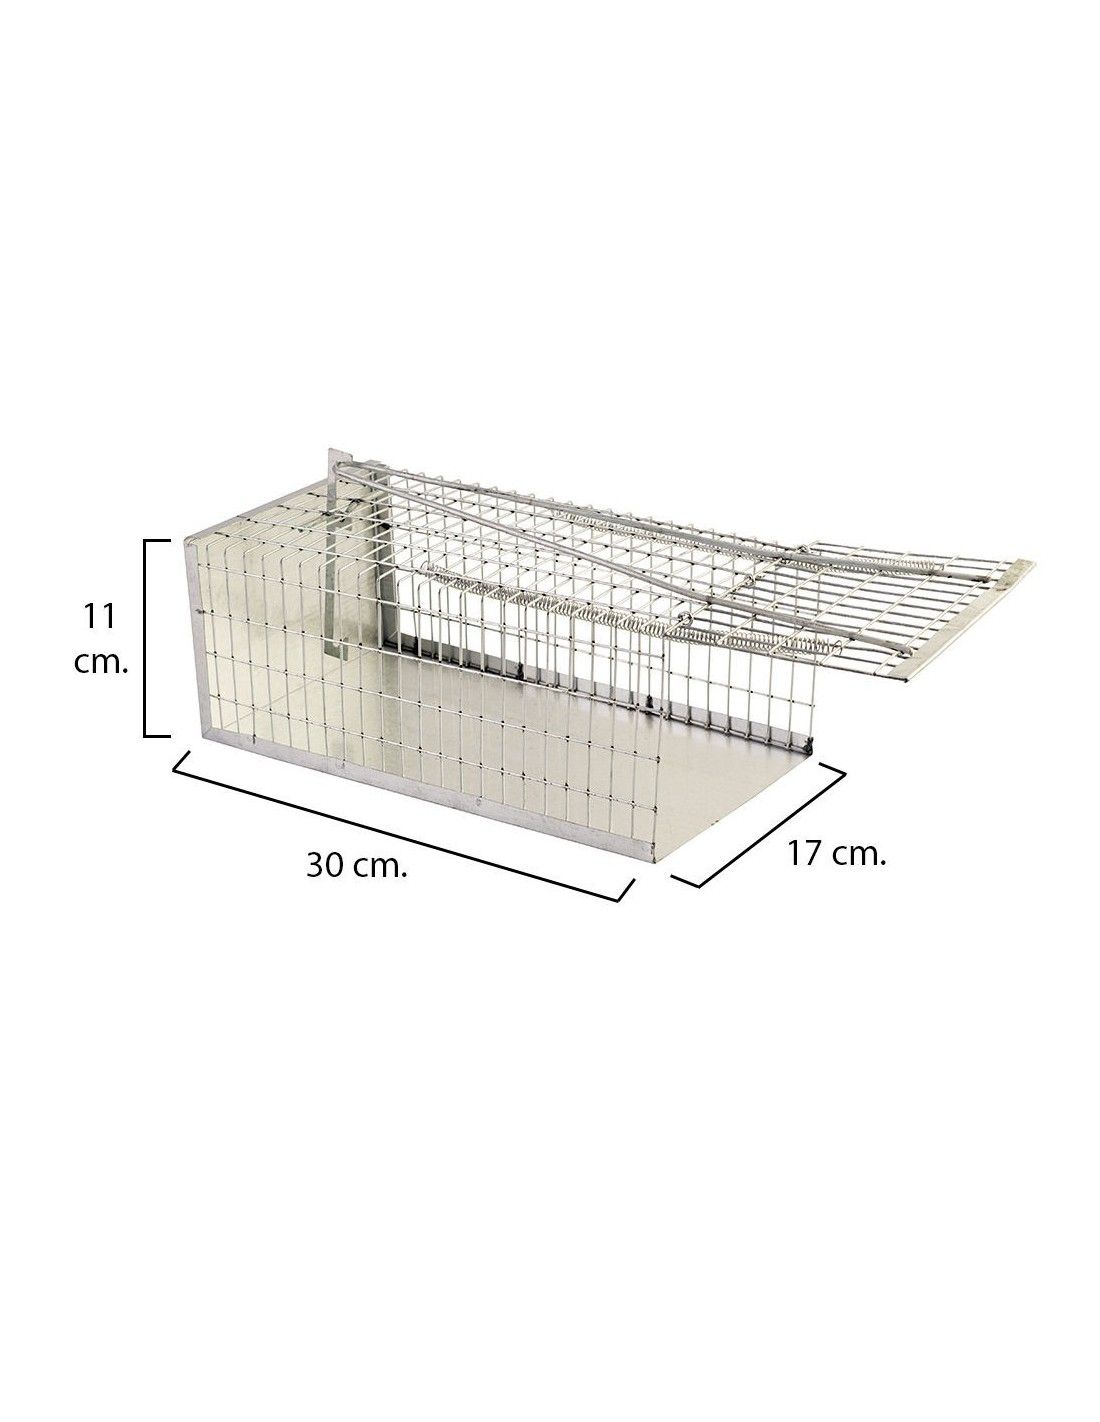 Trappola per topi in gabbia metallica completa 30 x 17 x 11 cm. - La Tienda  de Electricidad